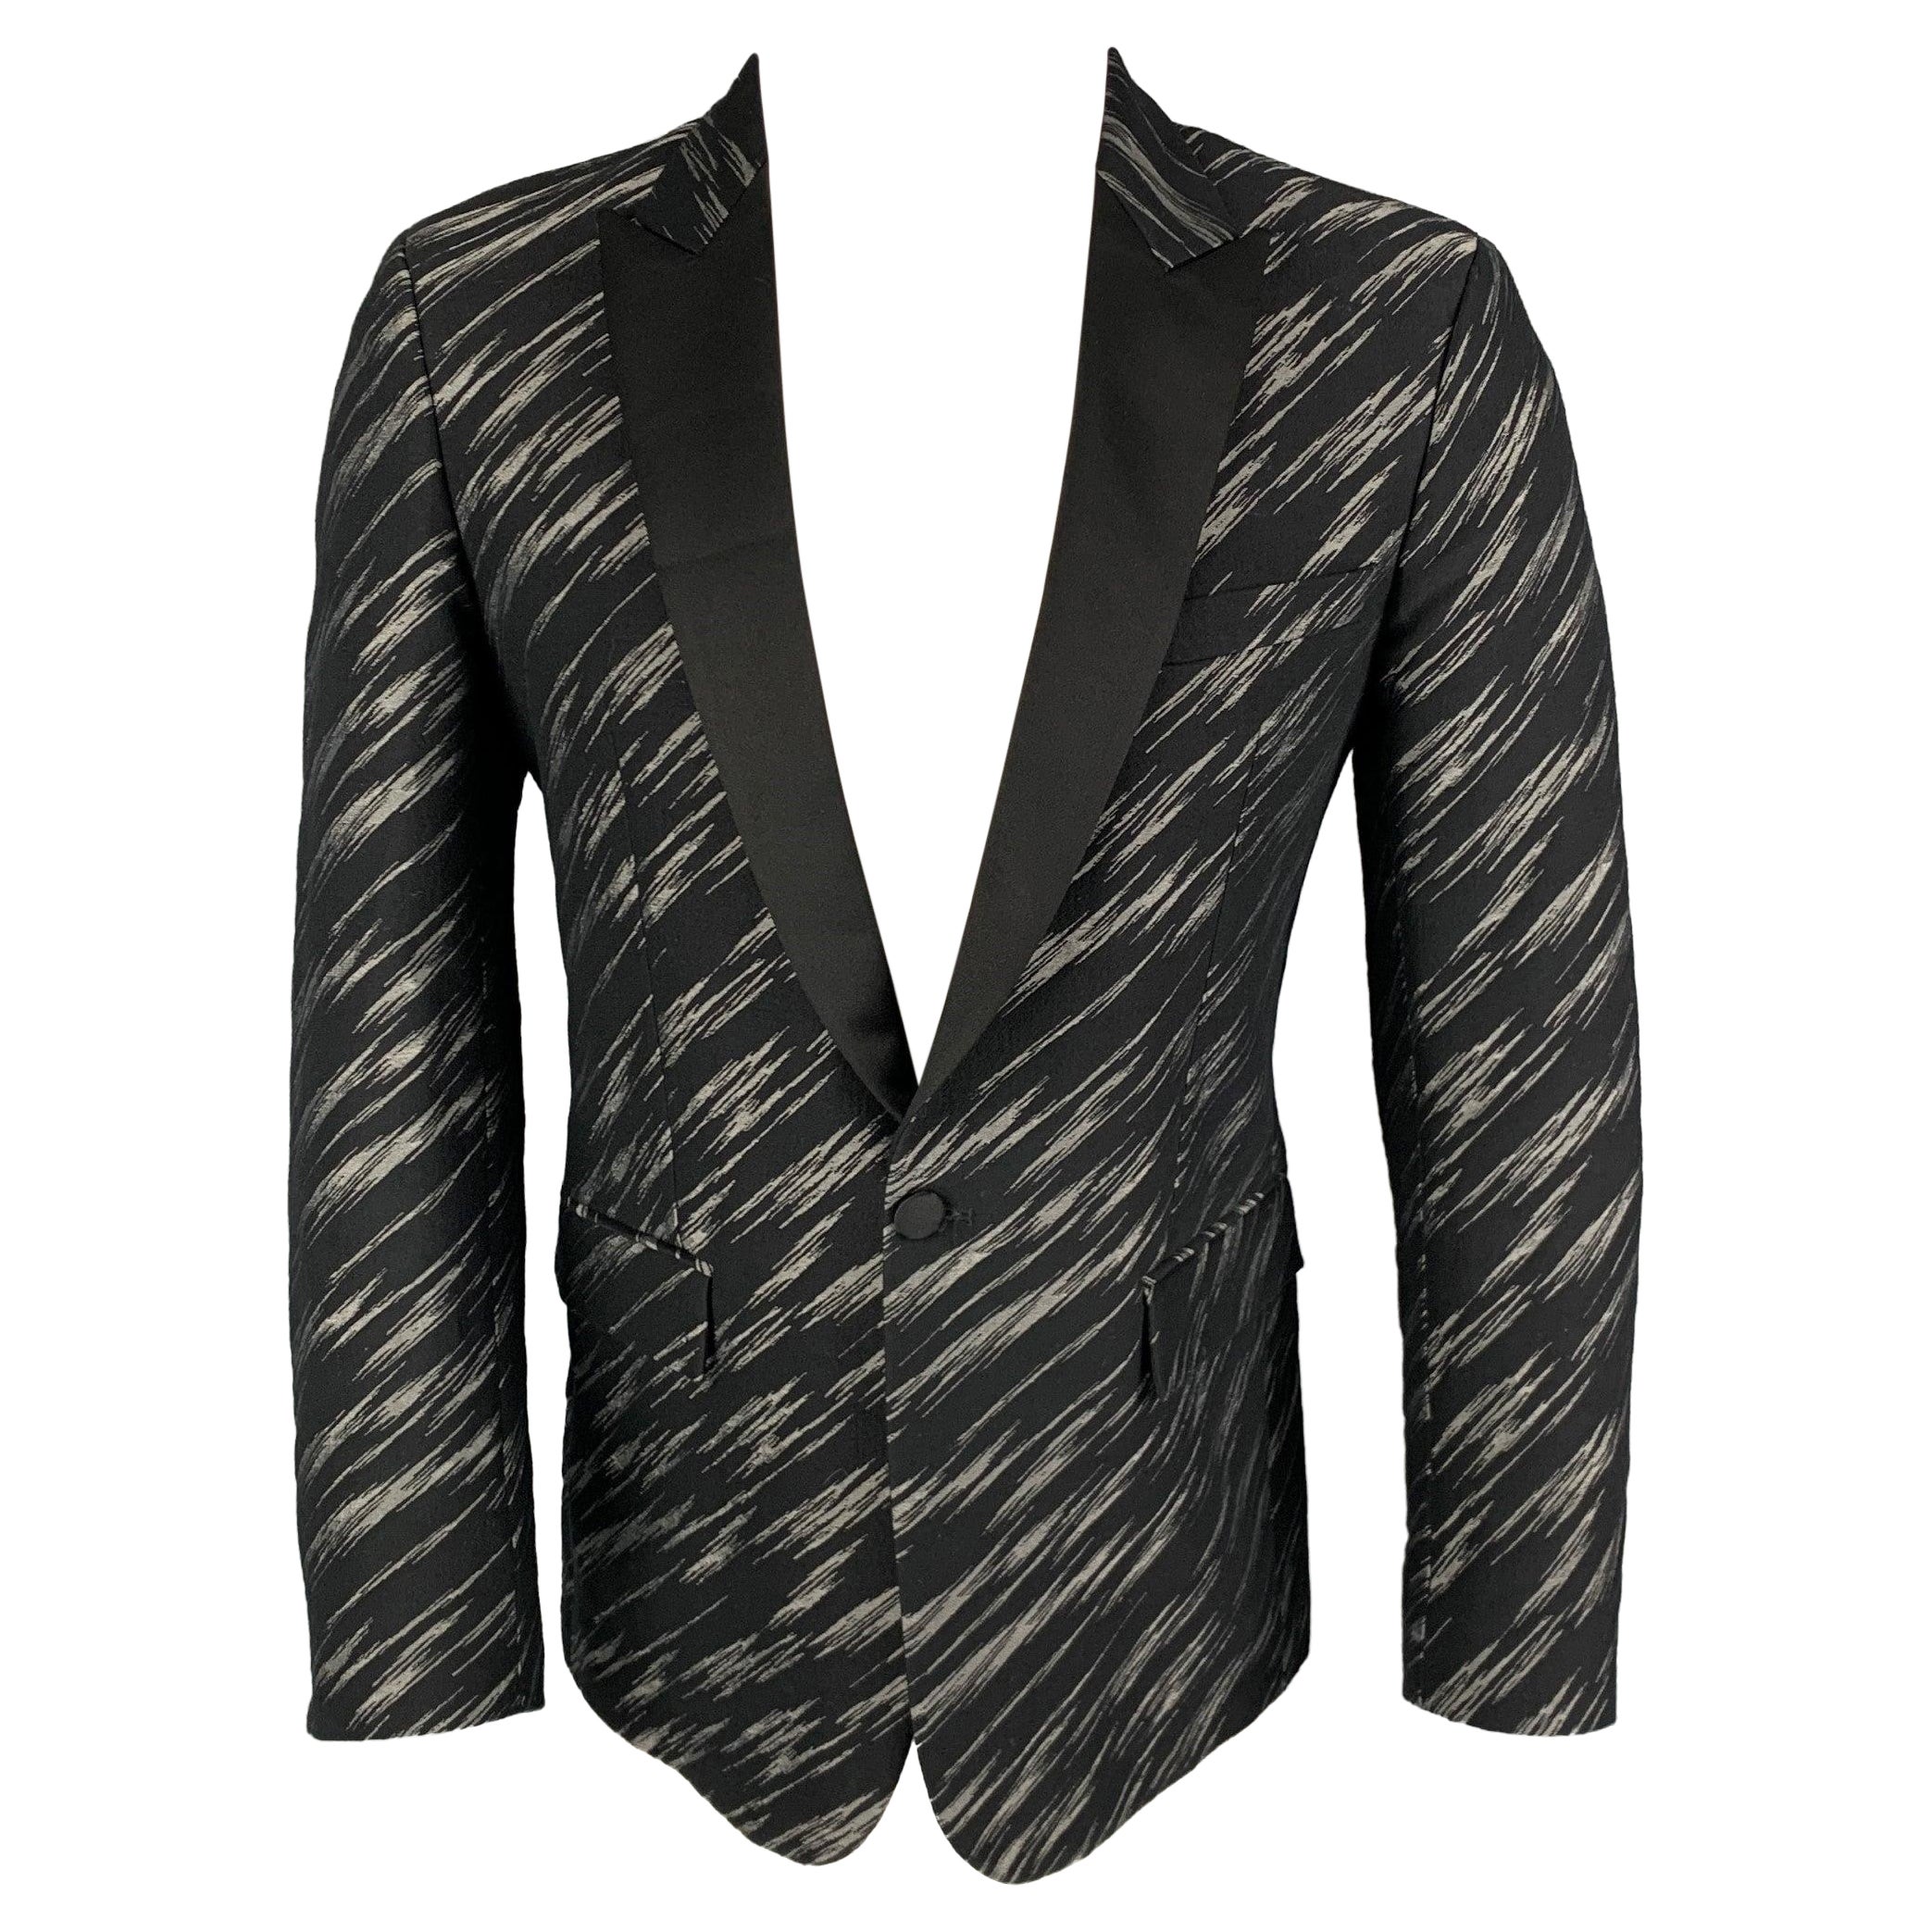 JUST CAVALLI Size 38 Black Grey Jacquard Wool Blend Peak Lapel Sport Coat For Sale